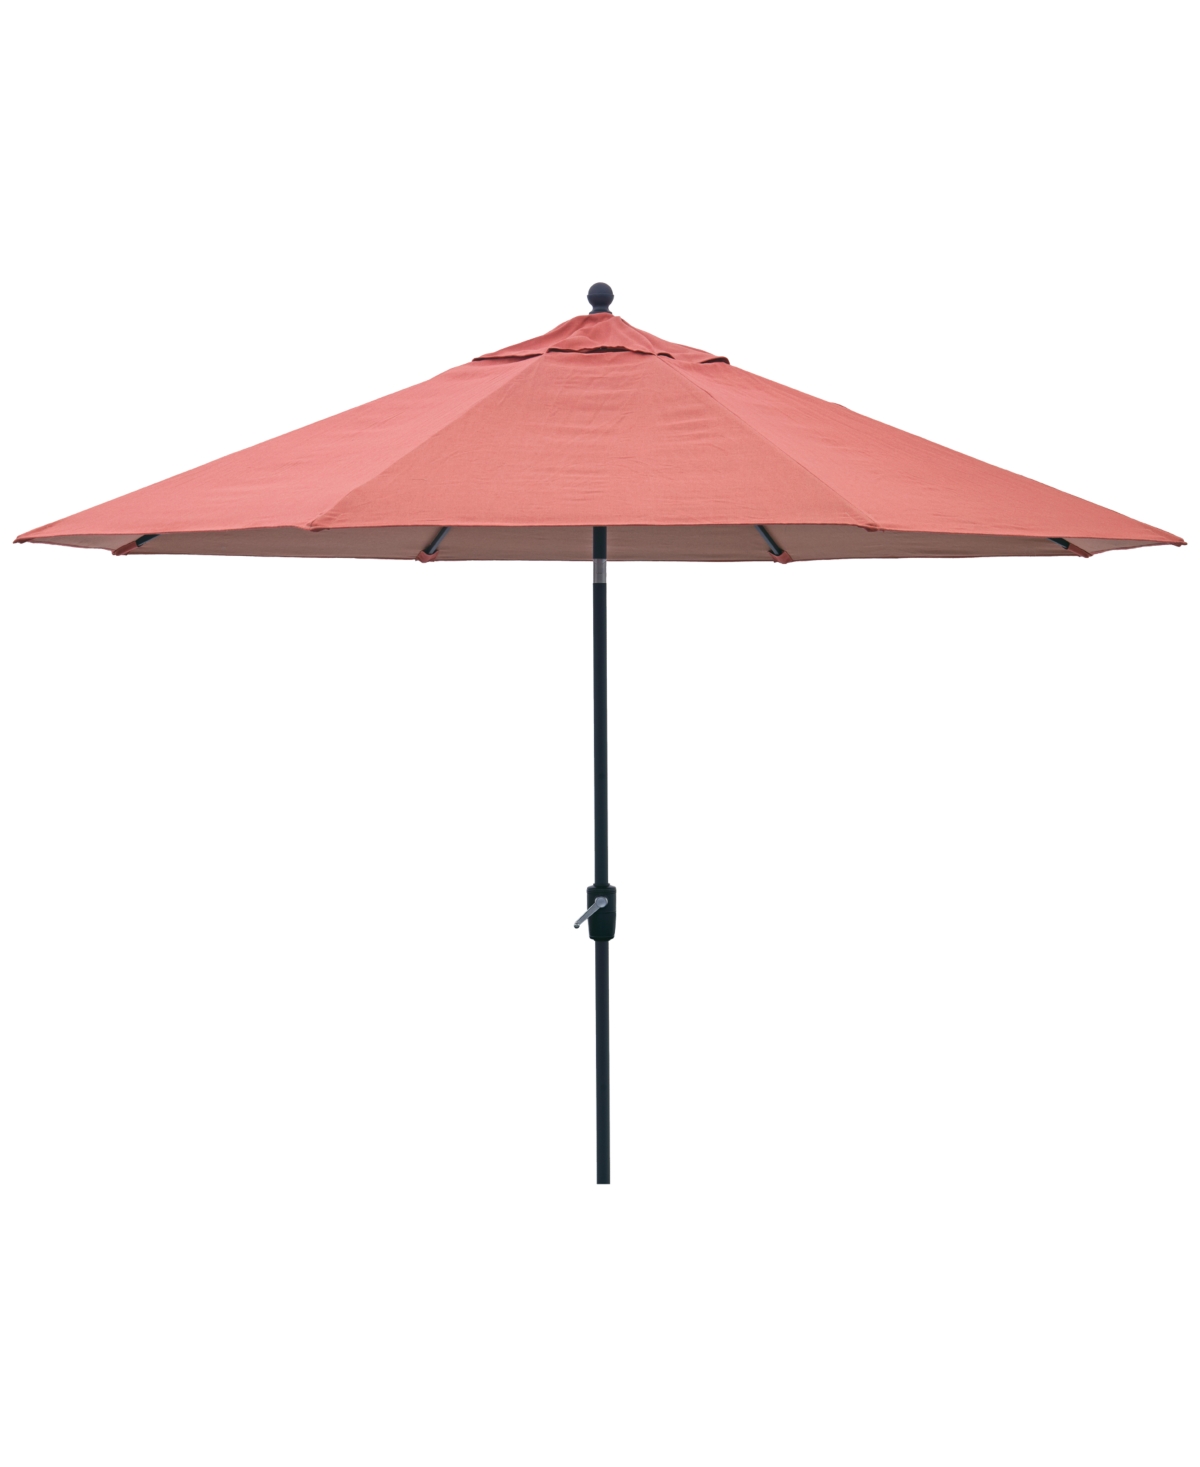 Agio Wythburn Mix And Match Fabric 11' Umbrella In Peony Brick Red,bronze Finish